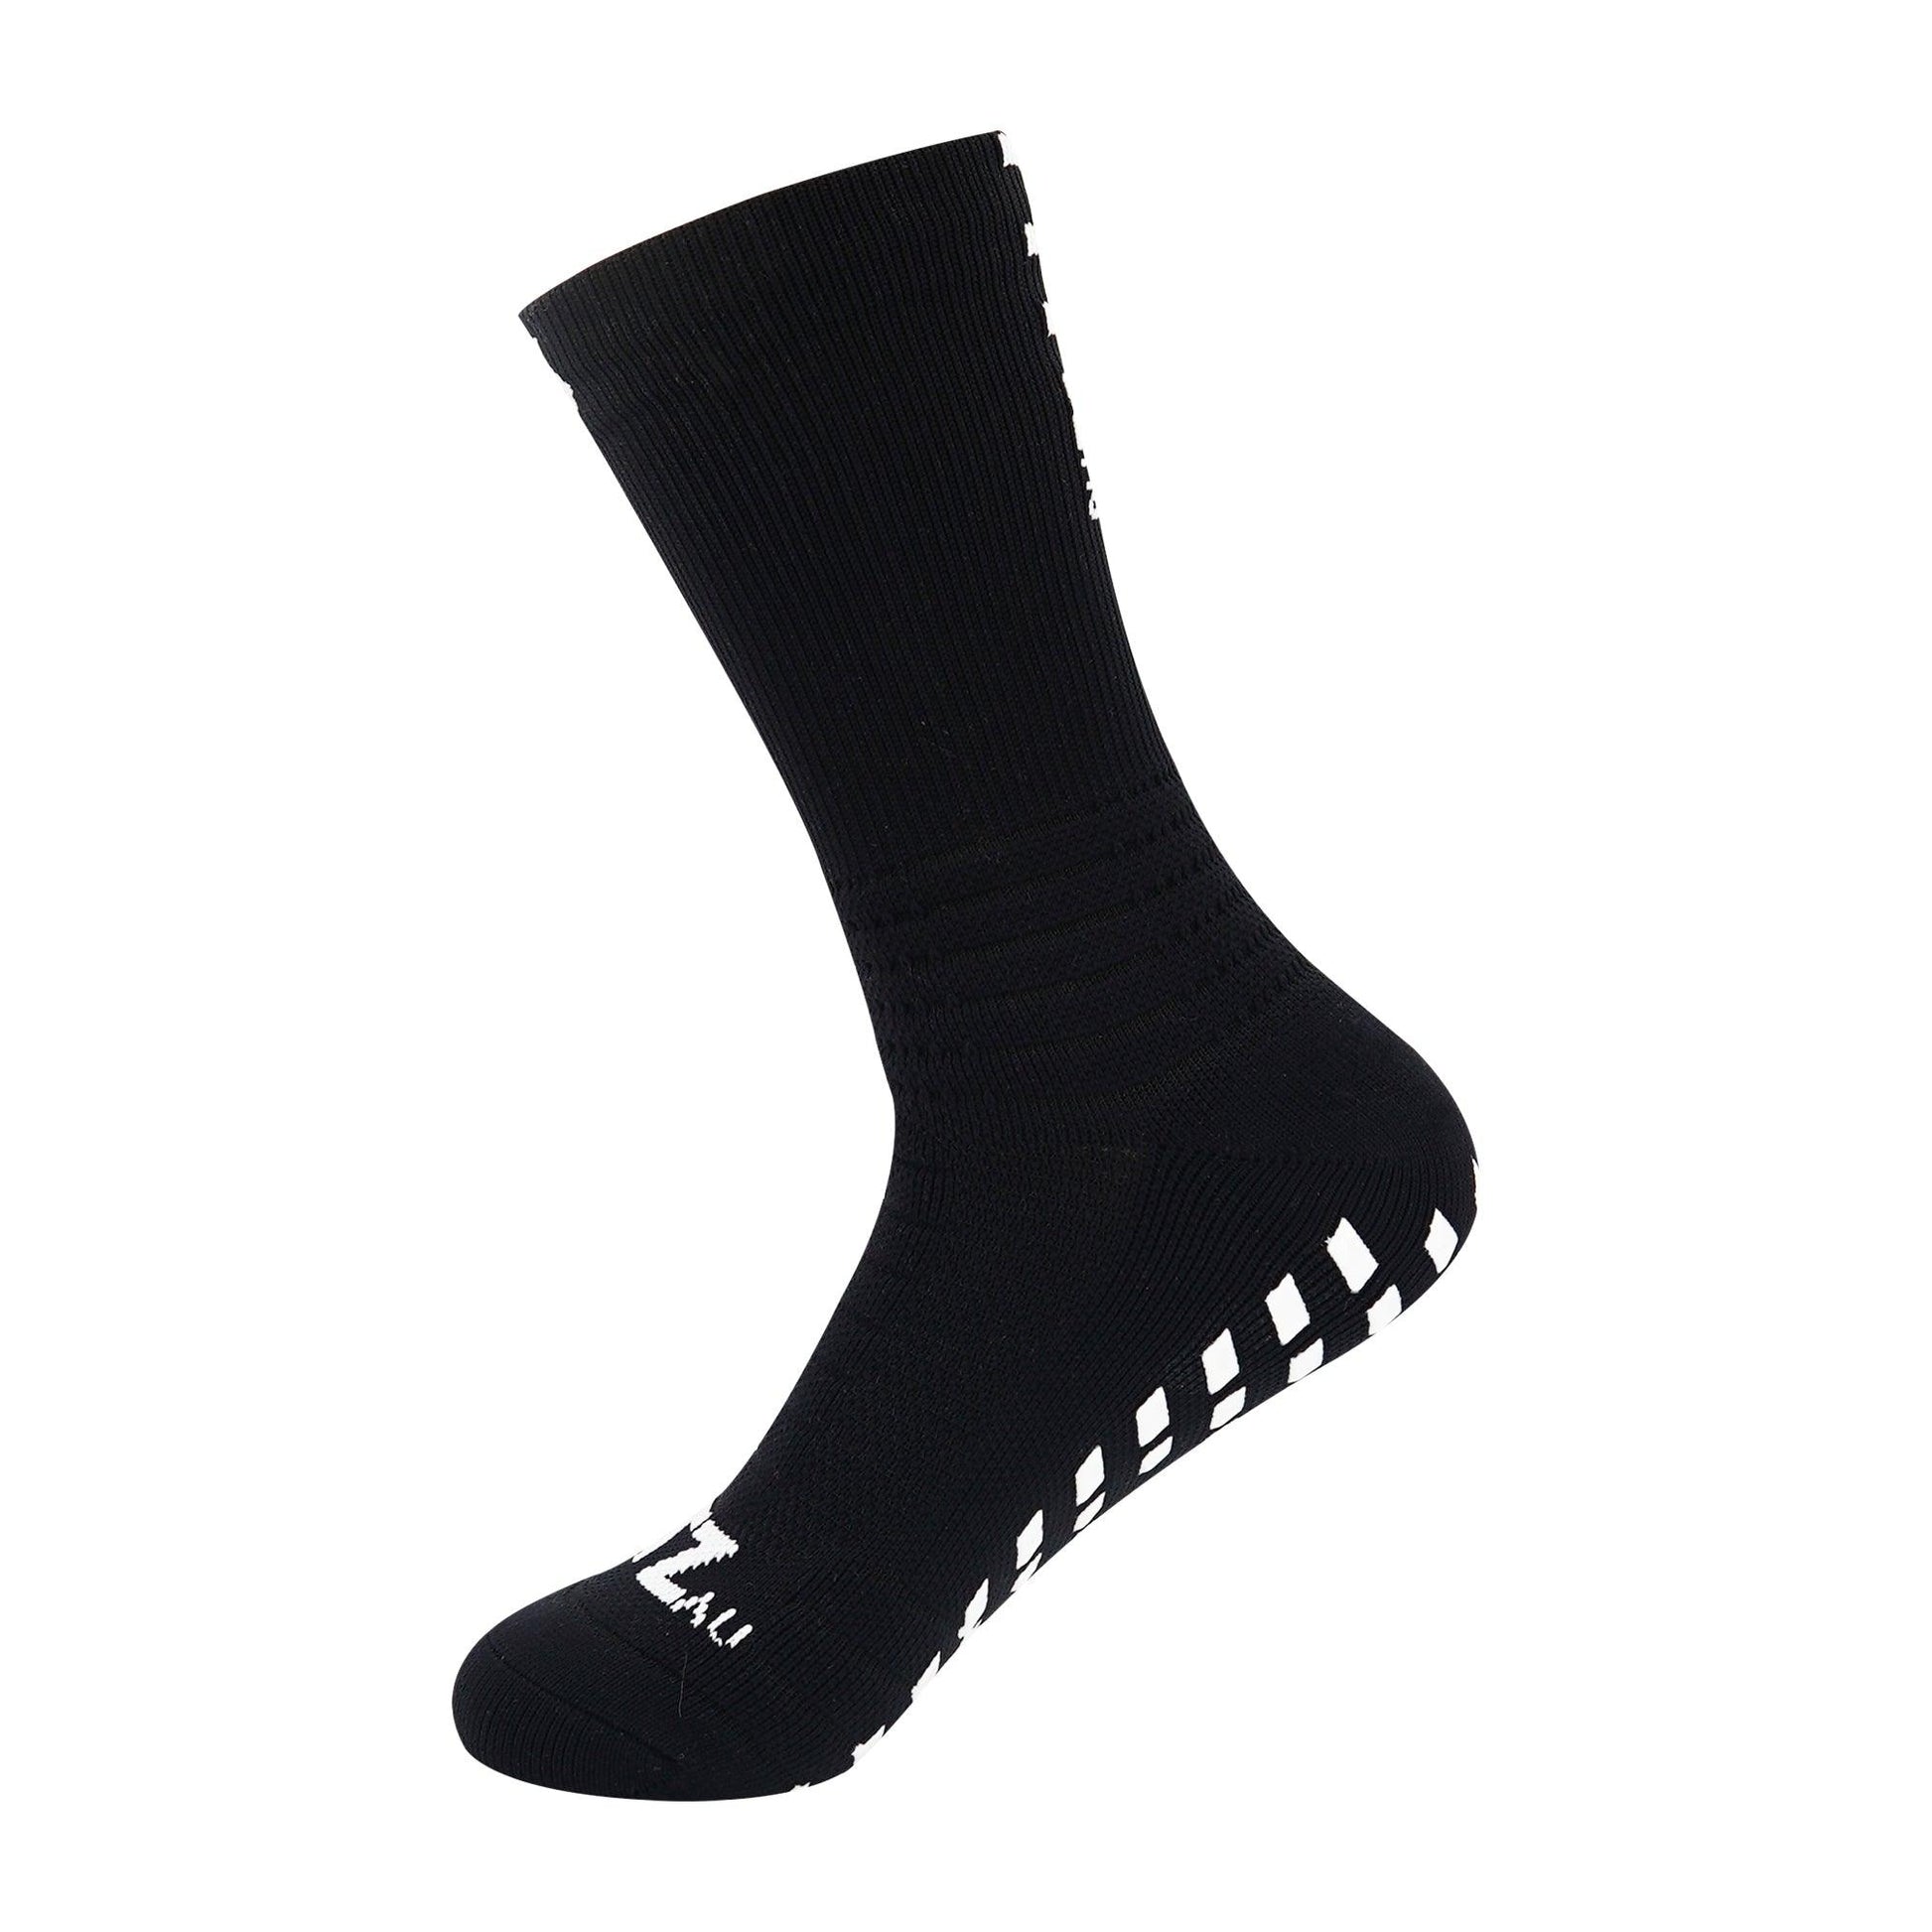 Supreme Grip Socks Black Anti Slip Socks Football FITZ Australia